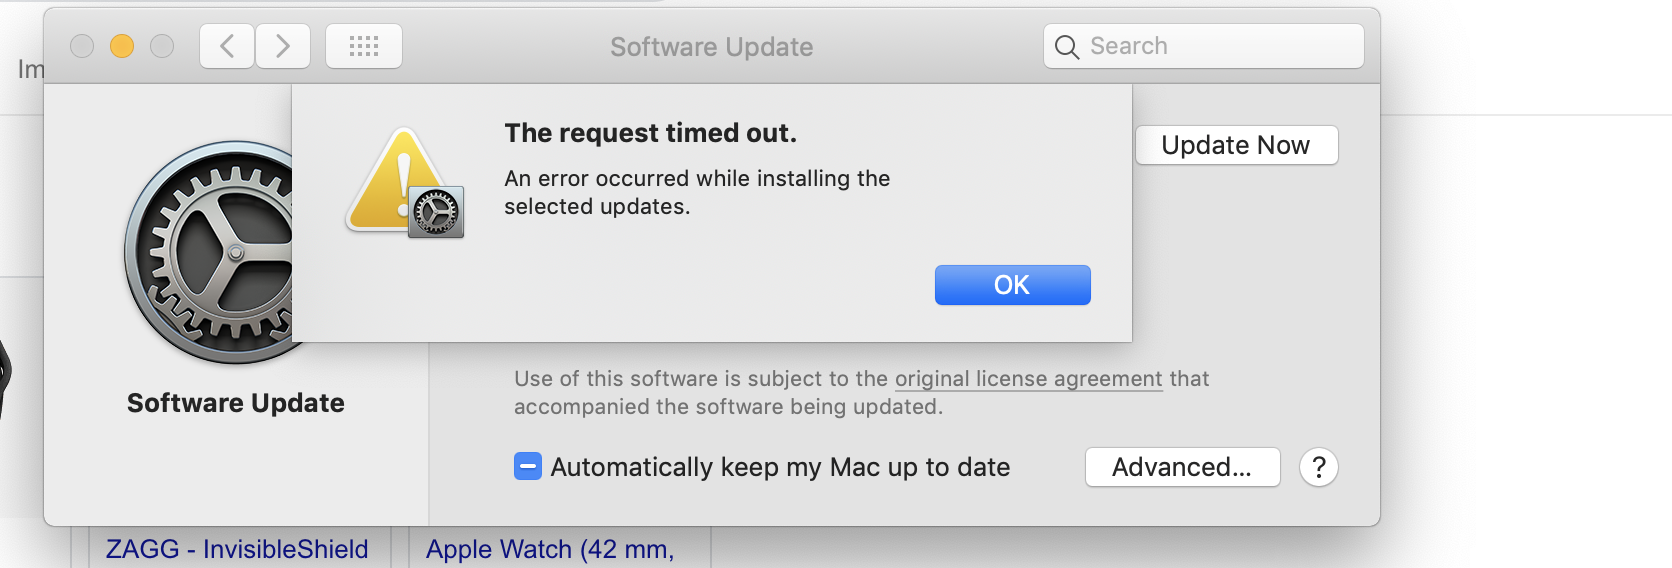 Macbook Pro wont update - Apple Community